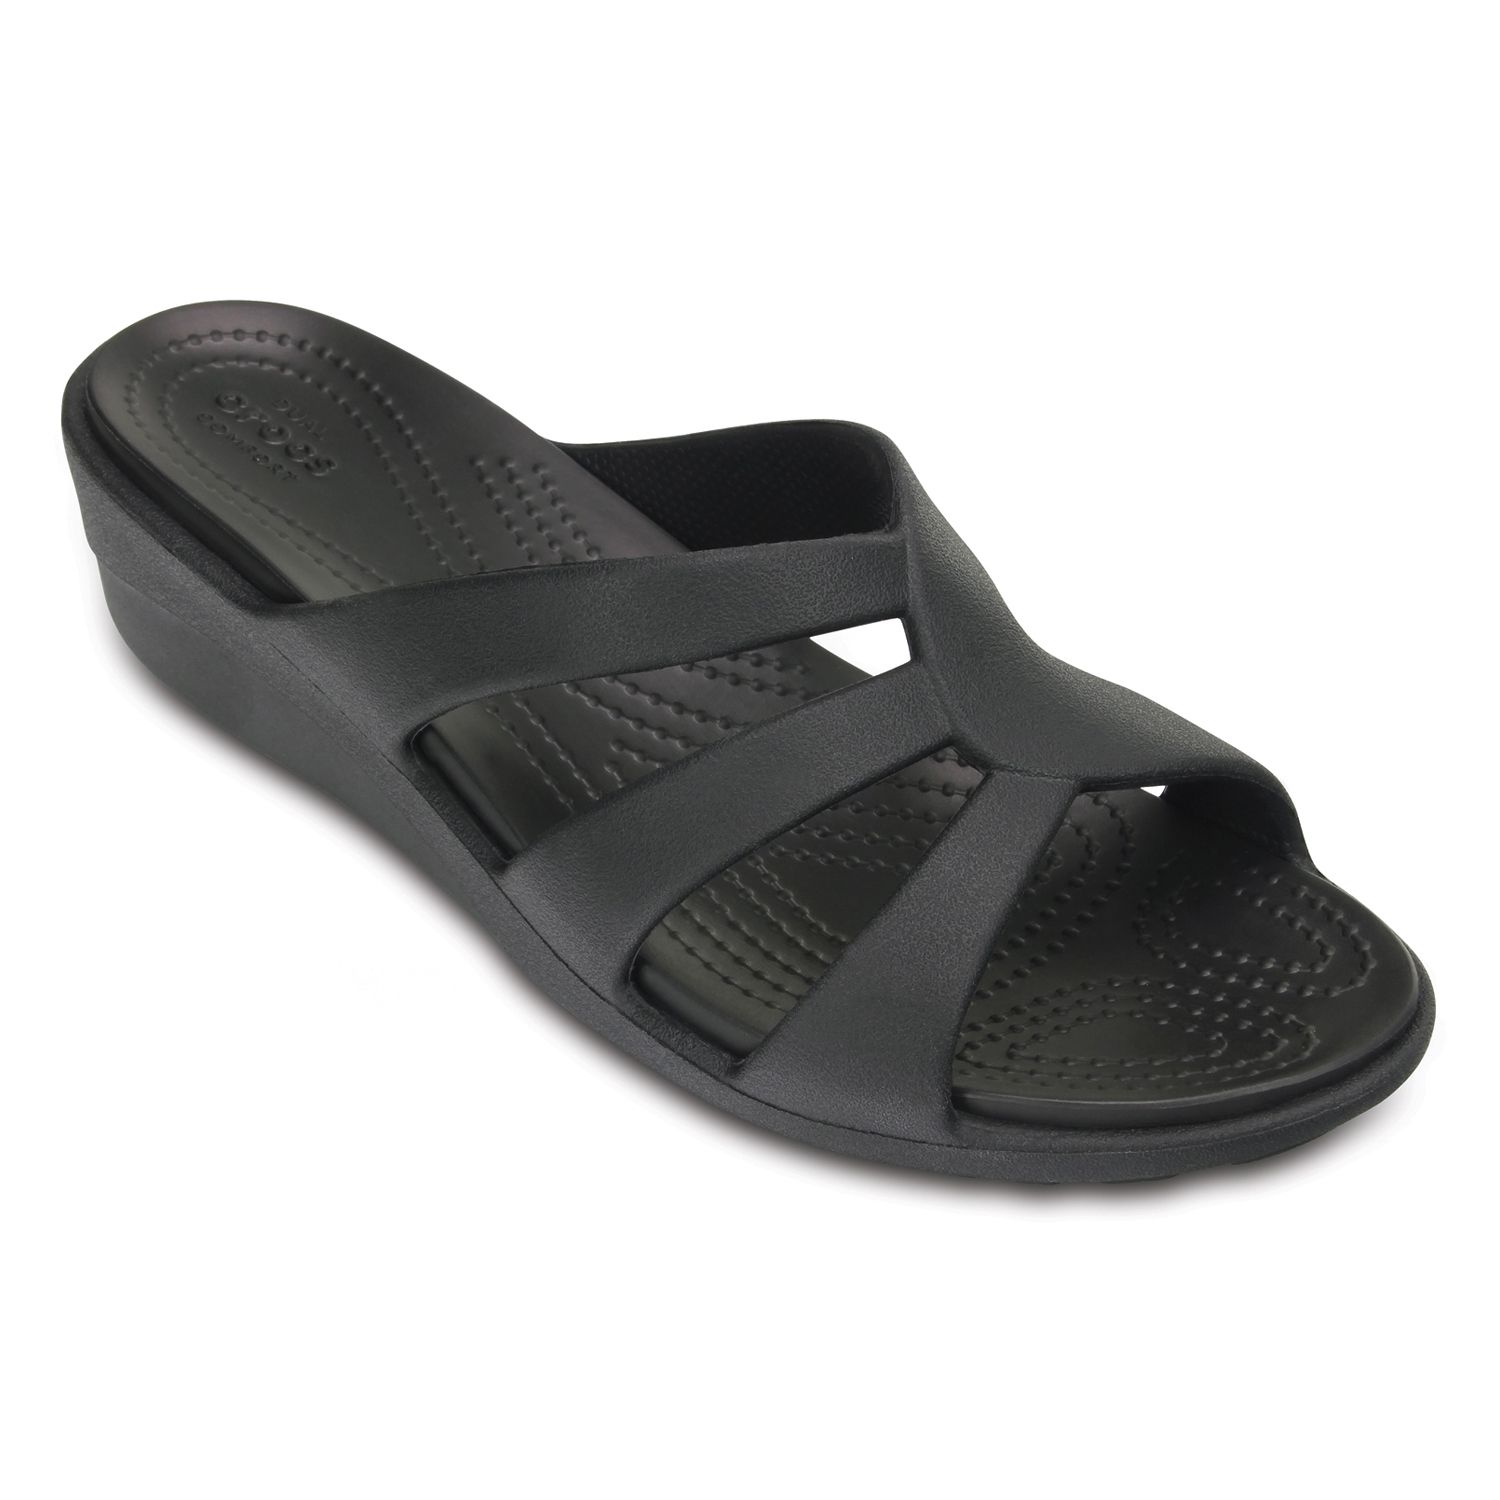 Crocs Sanrah Women's Strappy Wedge Sandals